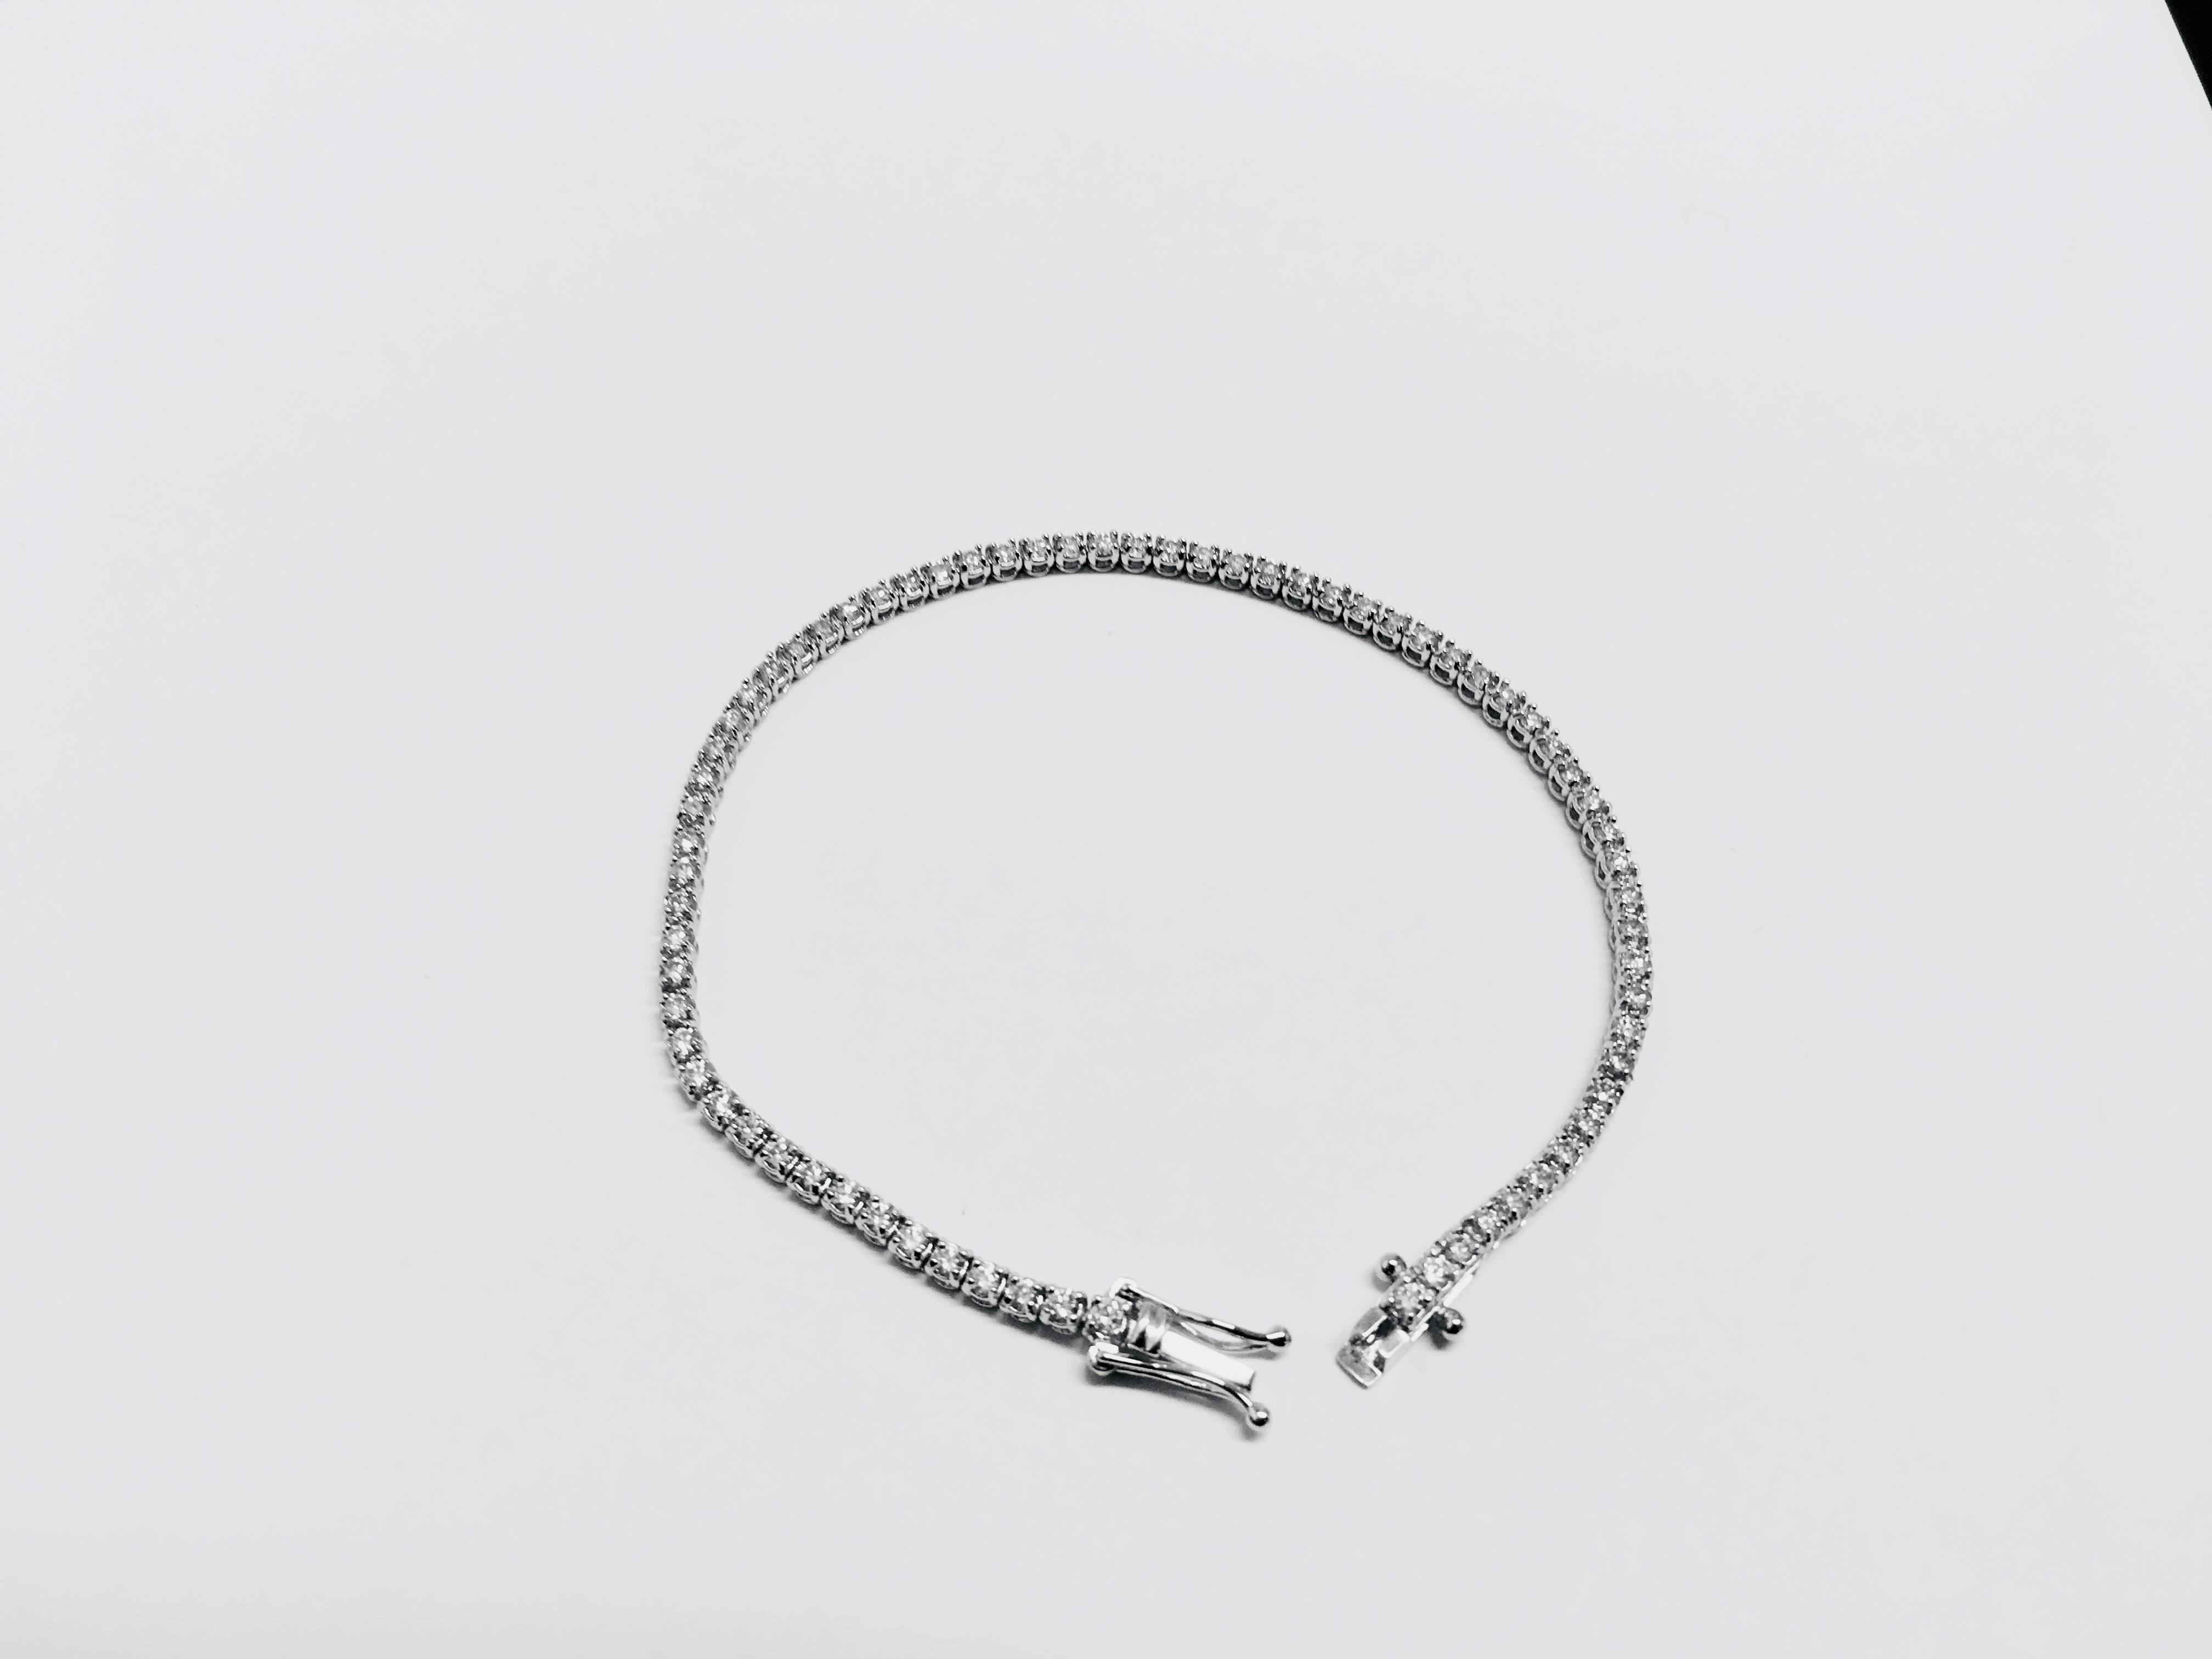 2.10ct diamond tennis bracelet with 70 brilliant cut diamonds - Image 3 of 4